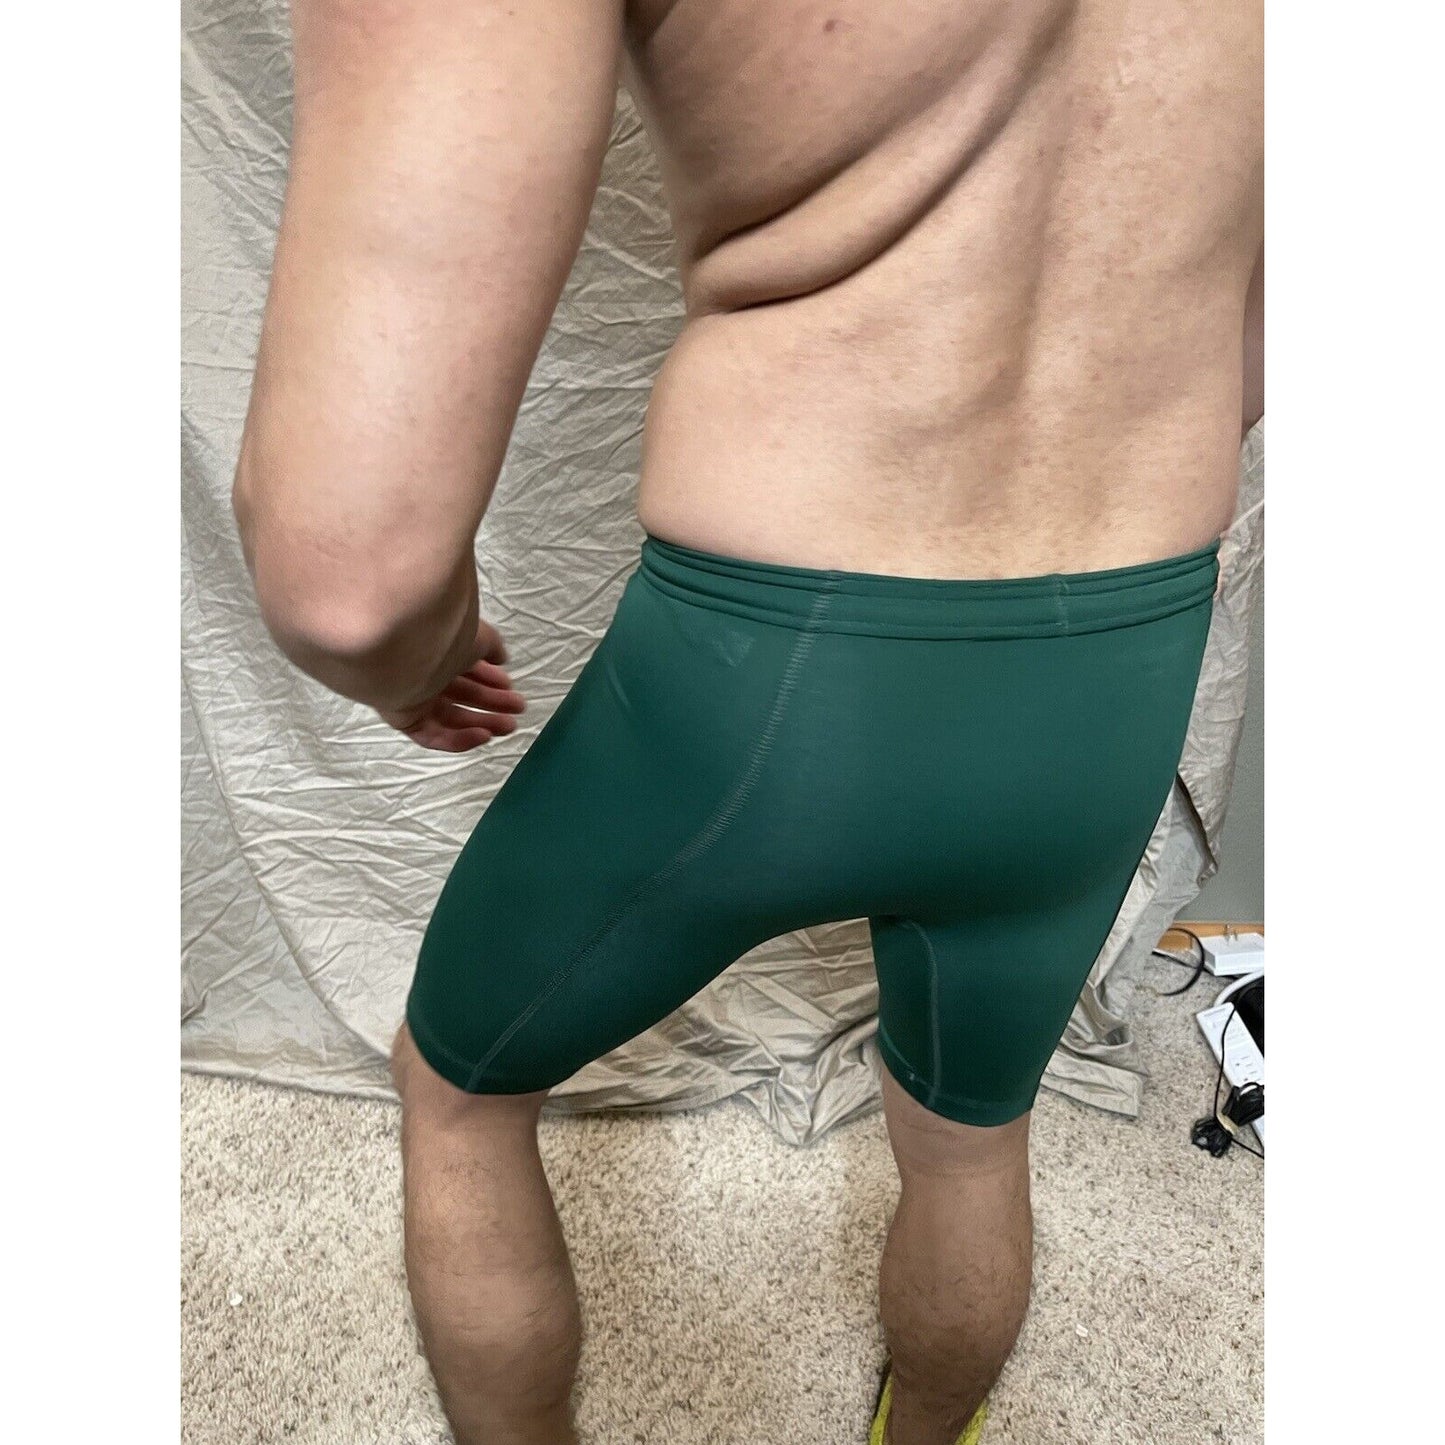 Men's brooks nylon spandex Green XS extra small compression shorts